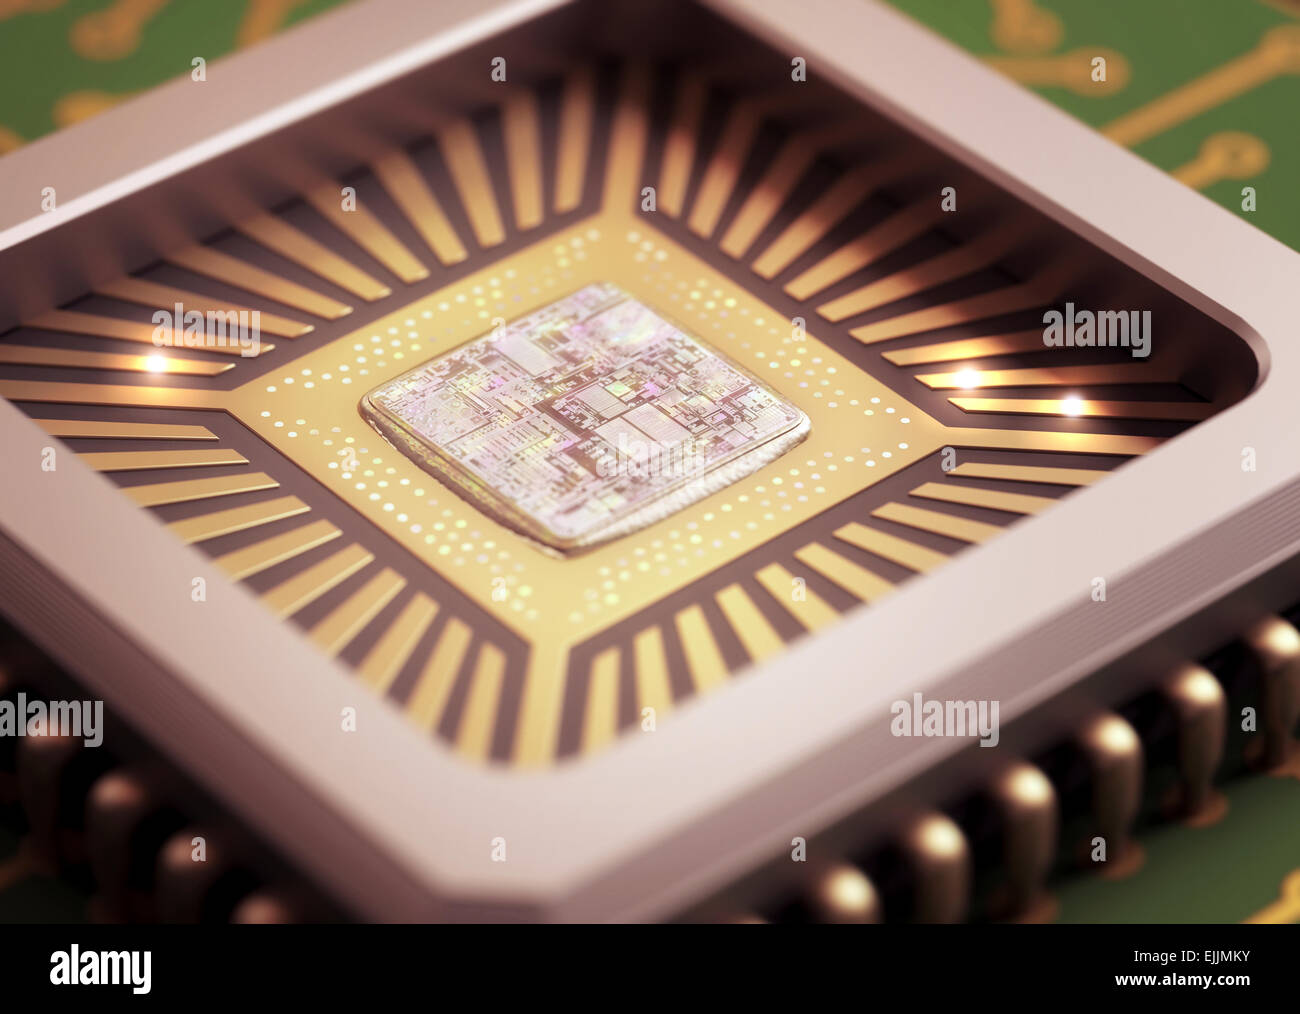 Microchip, computer illustration. Stock Photo